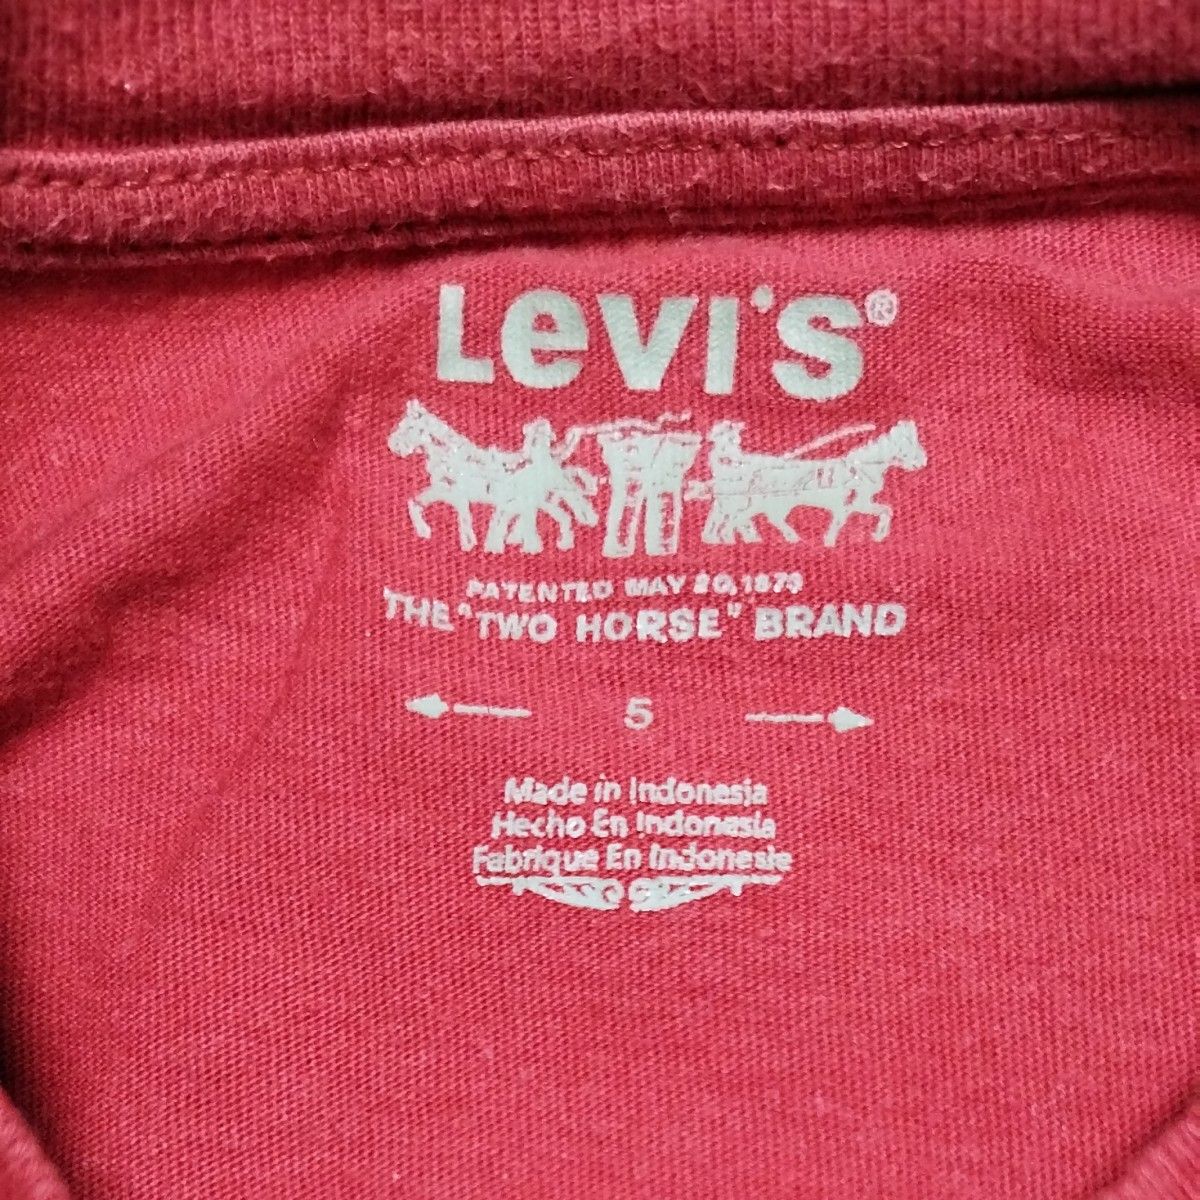 Levi's リーバイス キッズ服 キッズTシャツ 子供服 110 サイズ 5歳表記 tシャツ 子供tシャツ ボーイズ ガールズ